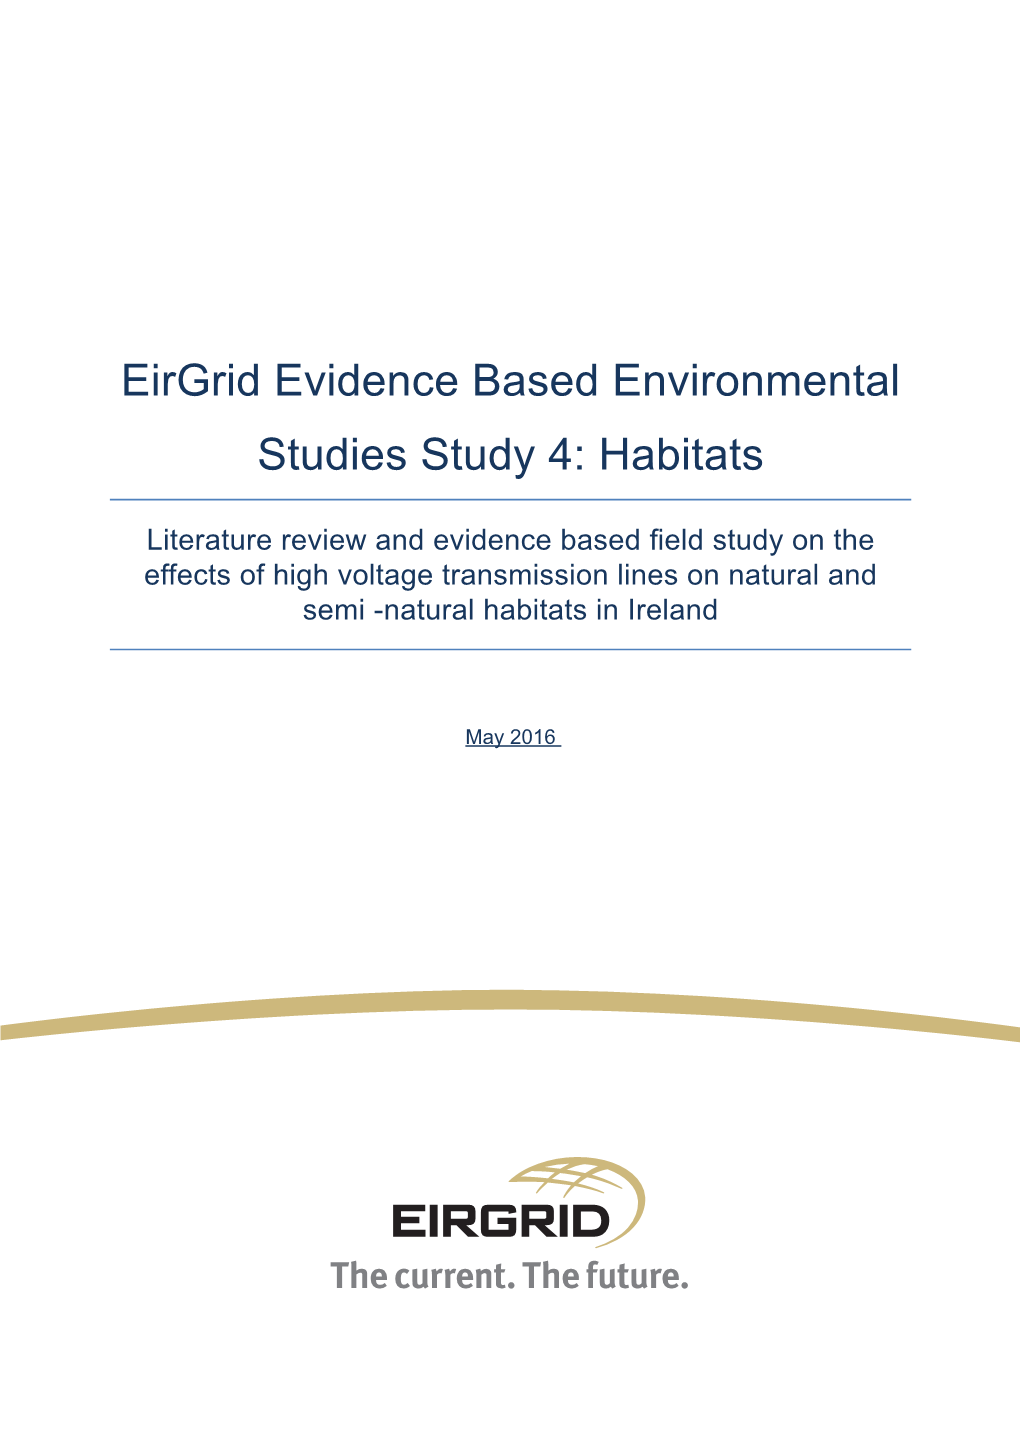 Eirgrid Evidence Based Environmental Study 4